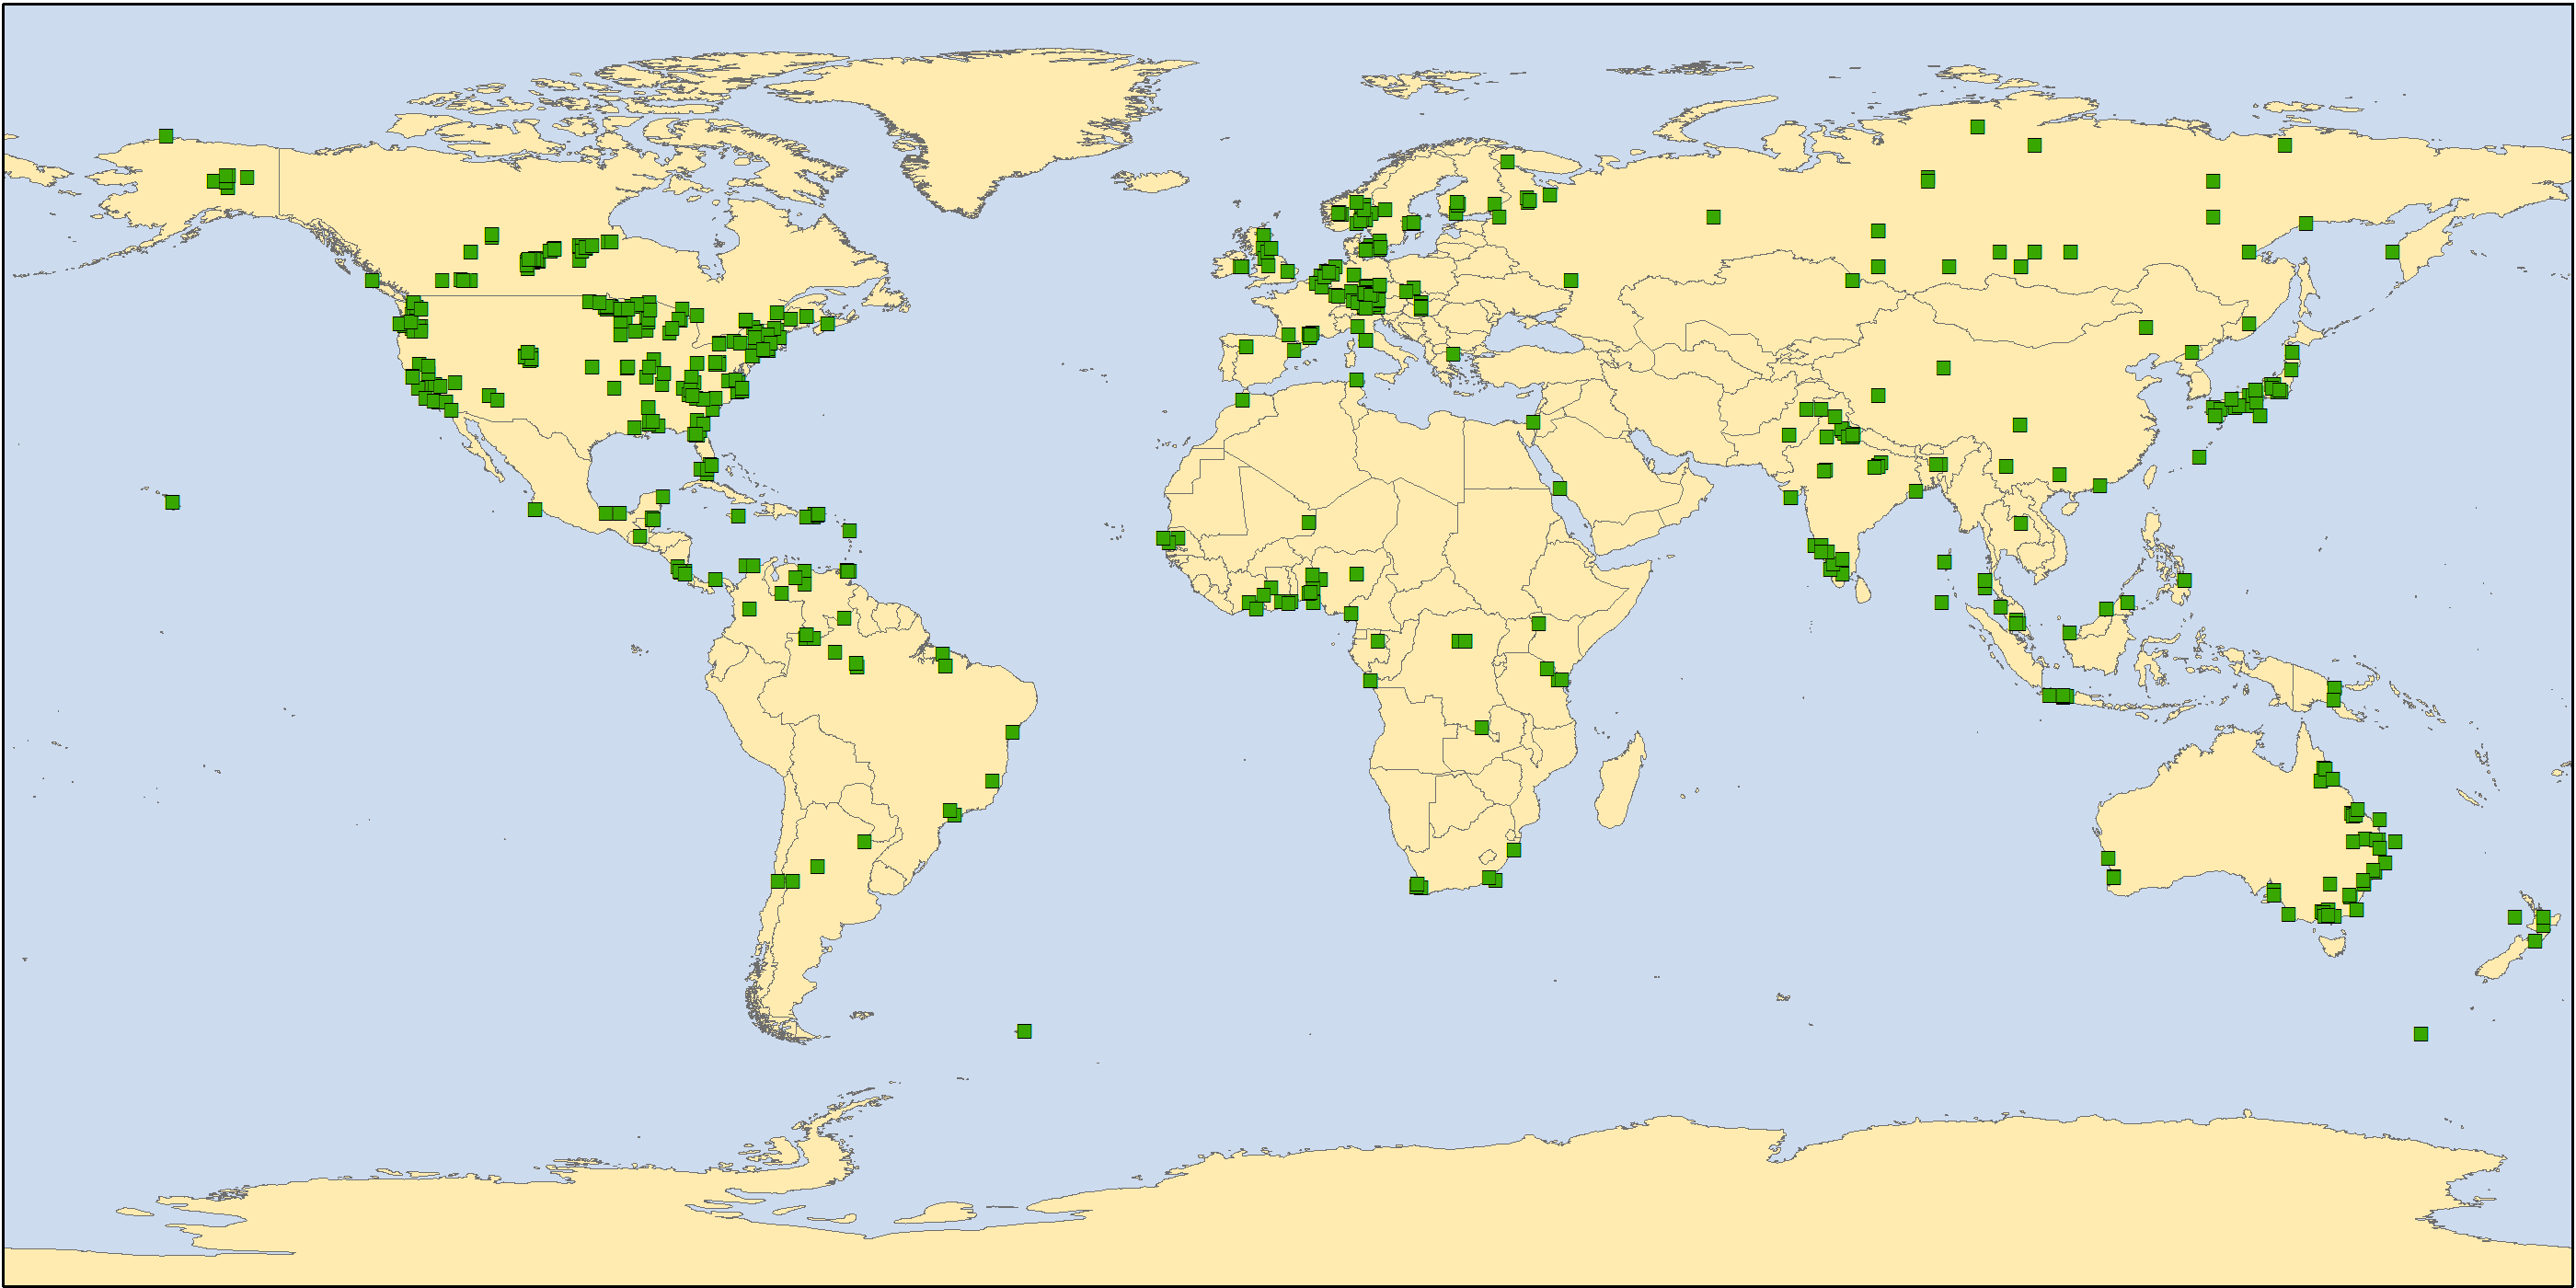 Global distribution of litterfall sites